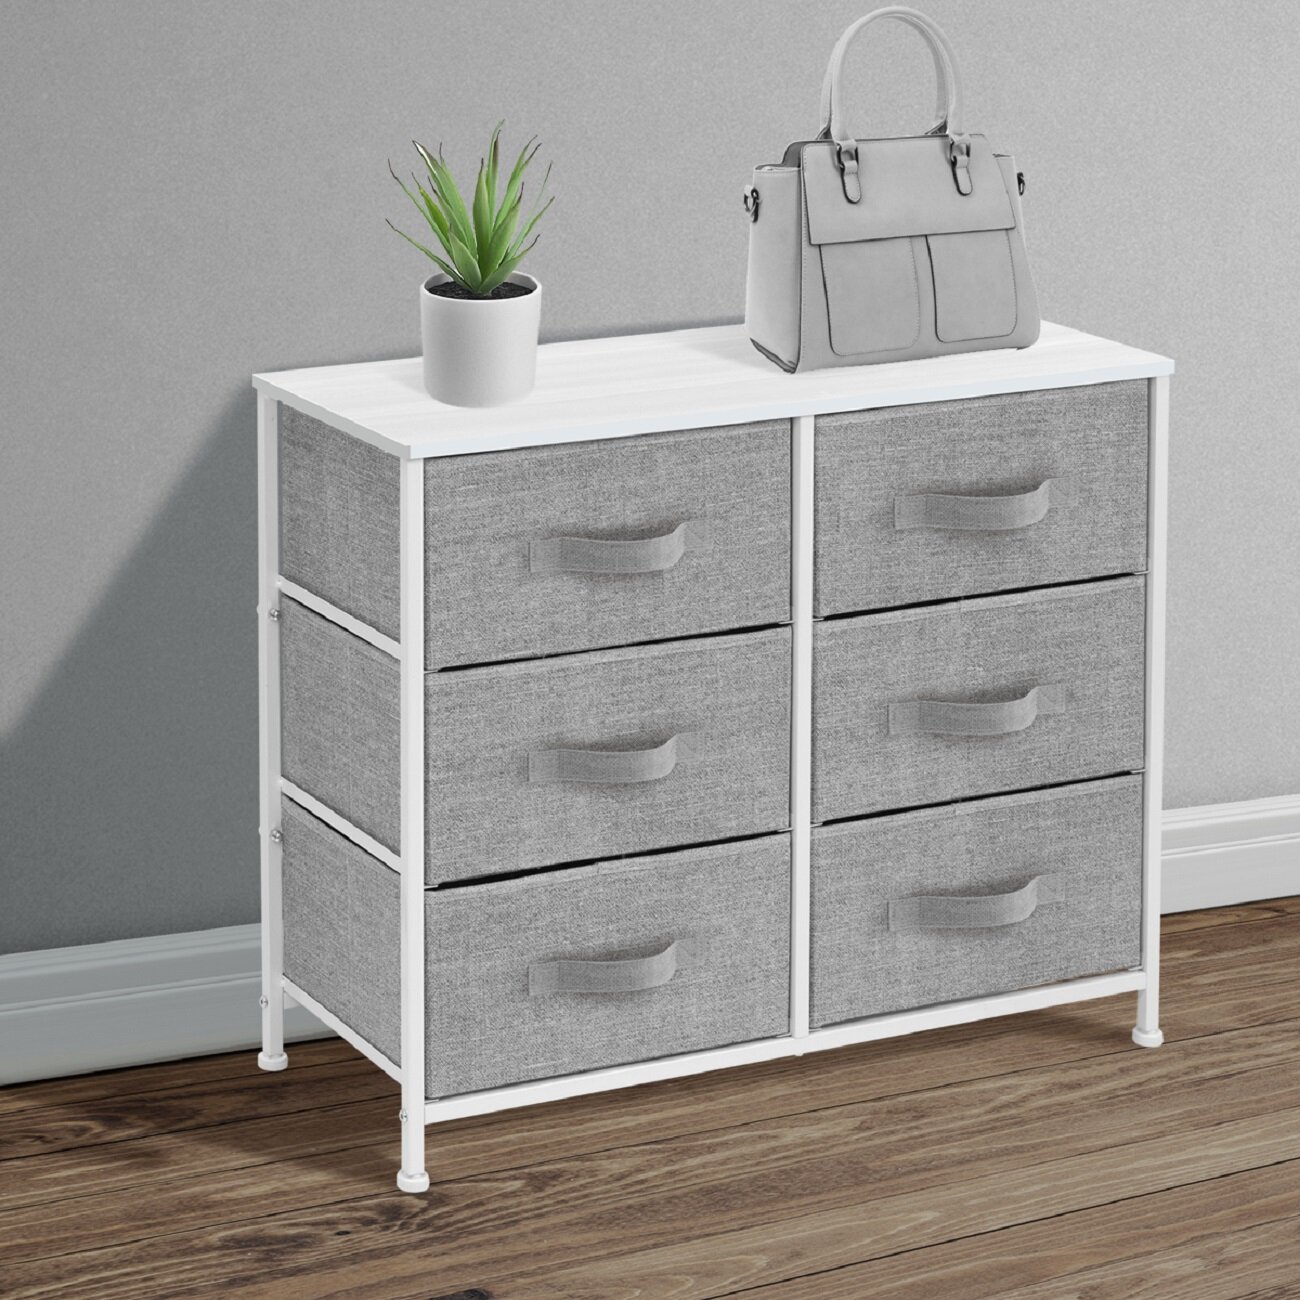 Ebern Designs Mandwe 6 Drawer Double Dresser Reviews Wayfair